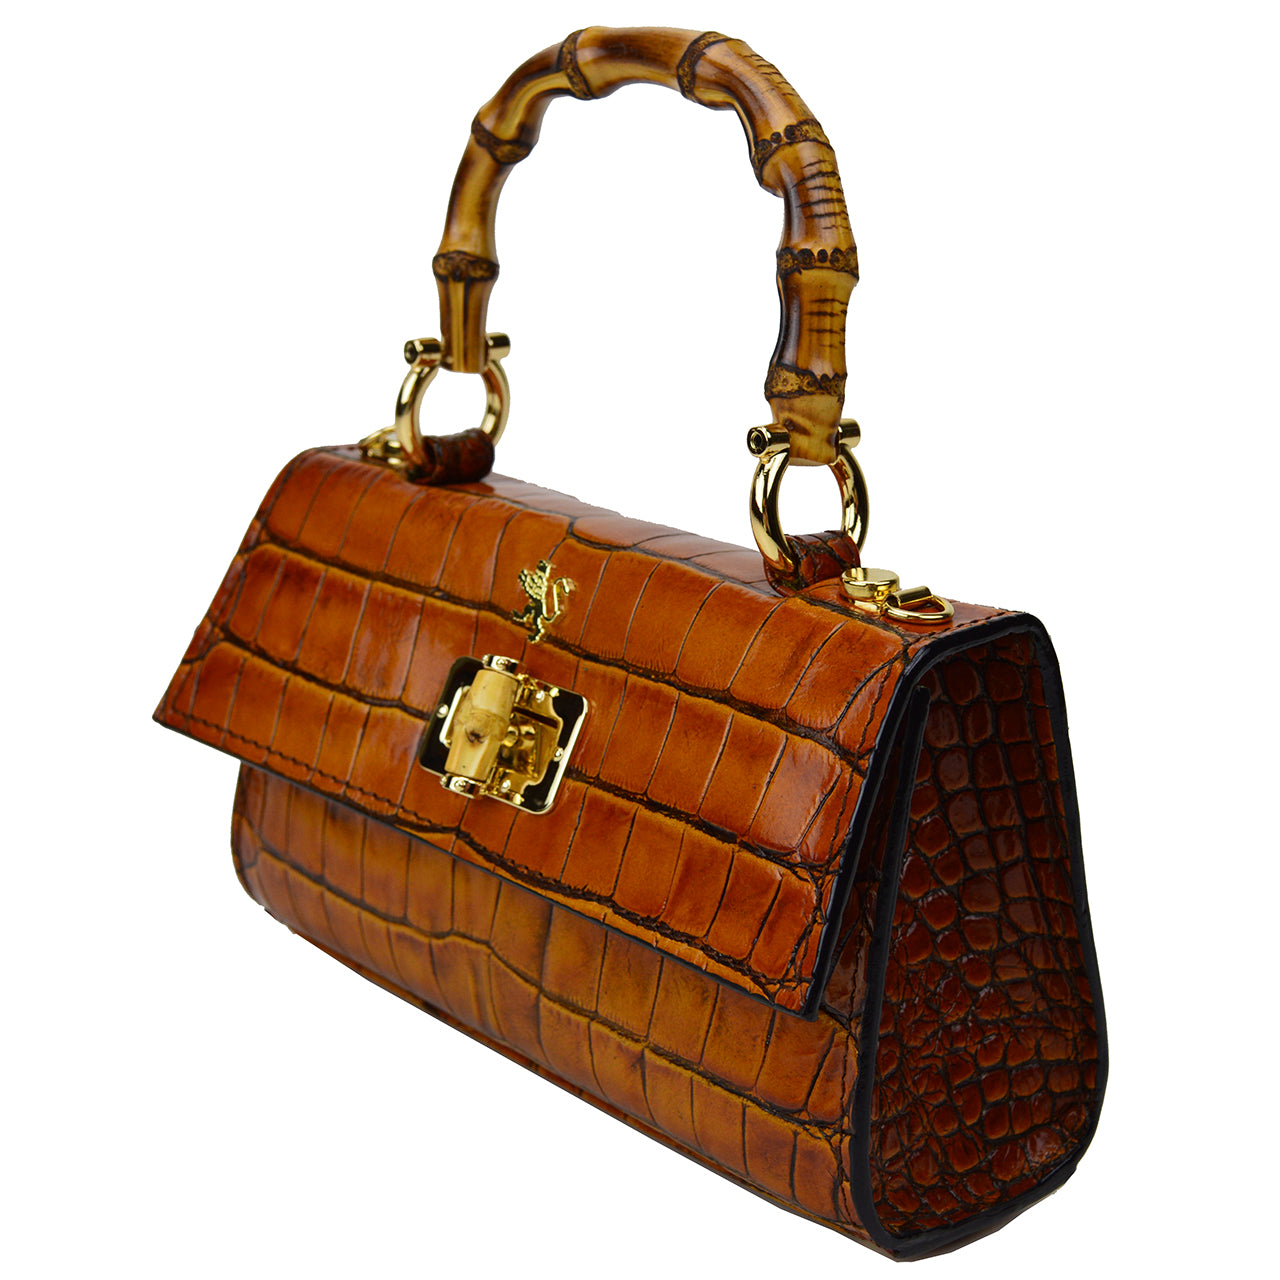 Pratesi Castalia Lady Bag in genuine Italian leather - Croco Embossed Leather Cognac